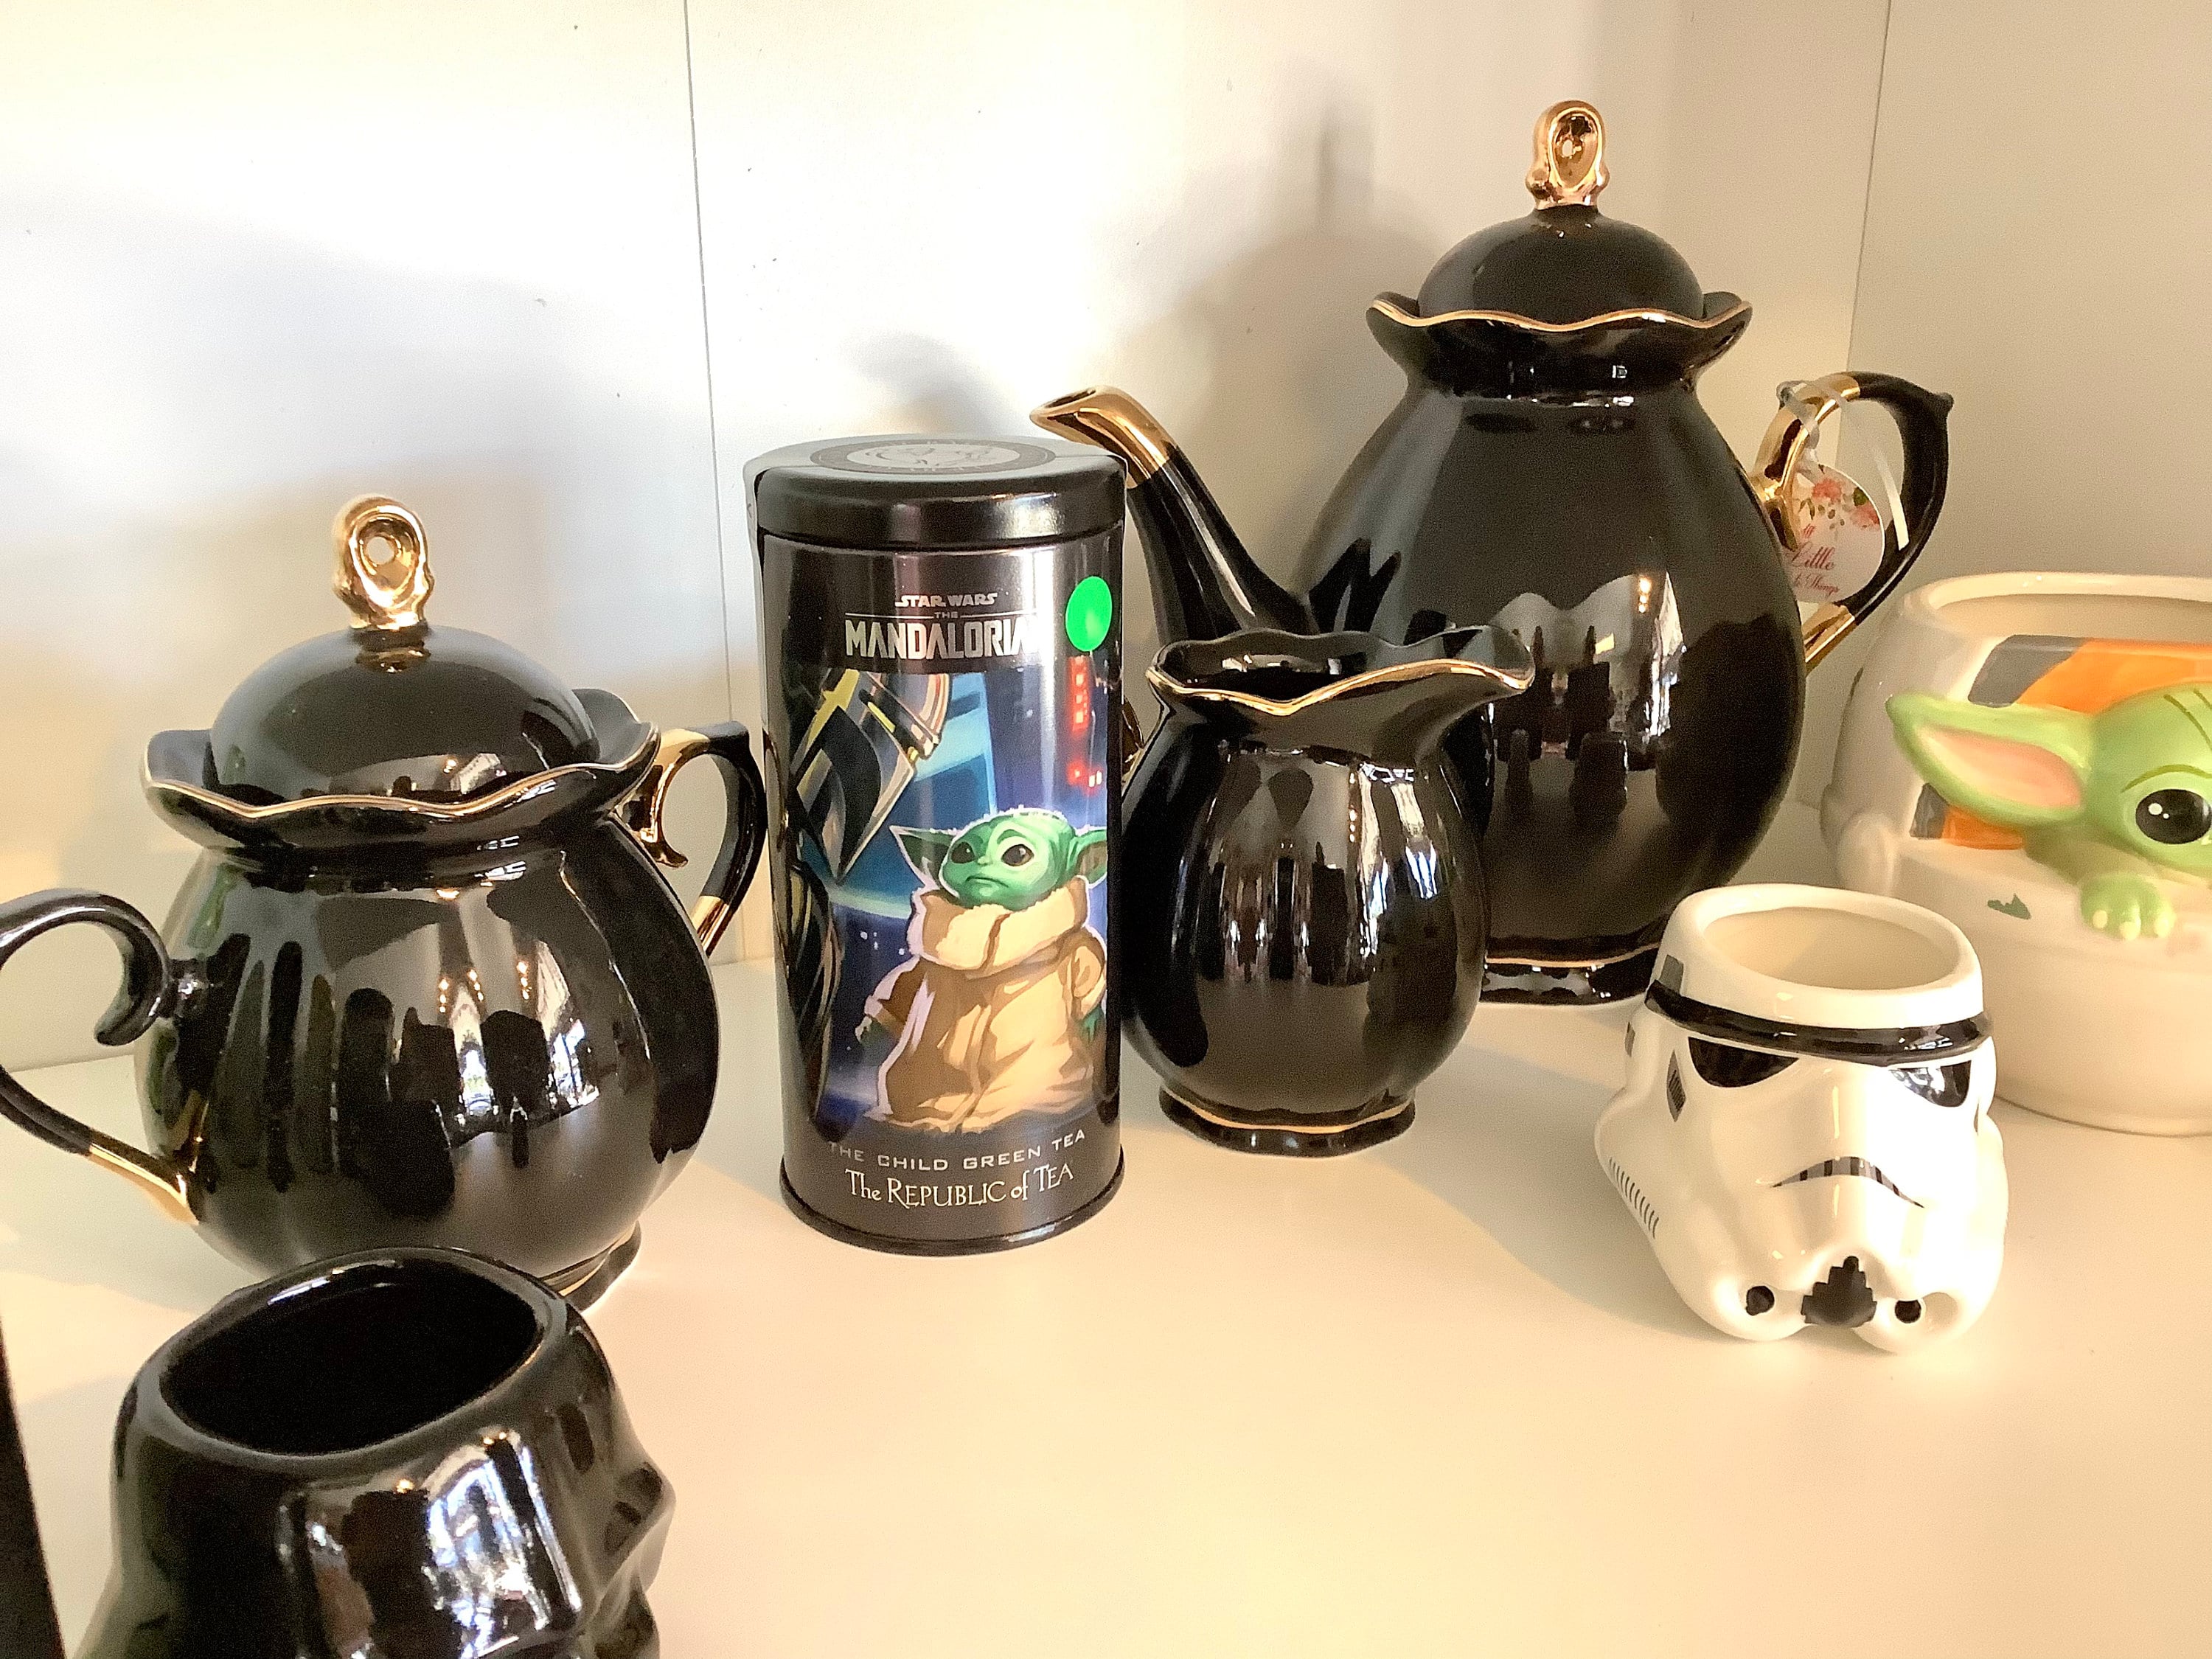 Star Wars Gift Black and Gold Porcelain Teapot Sugar Bowl 